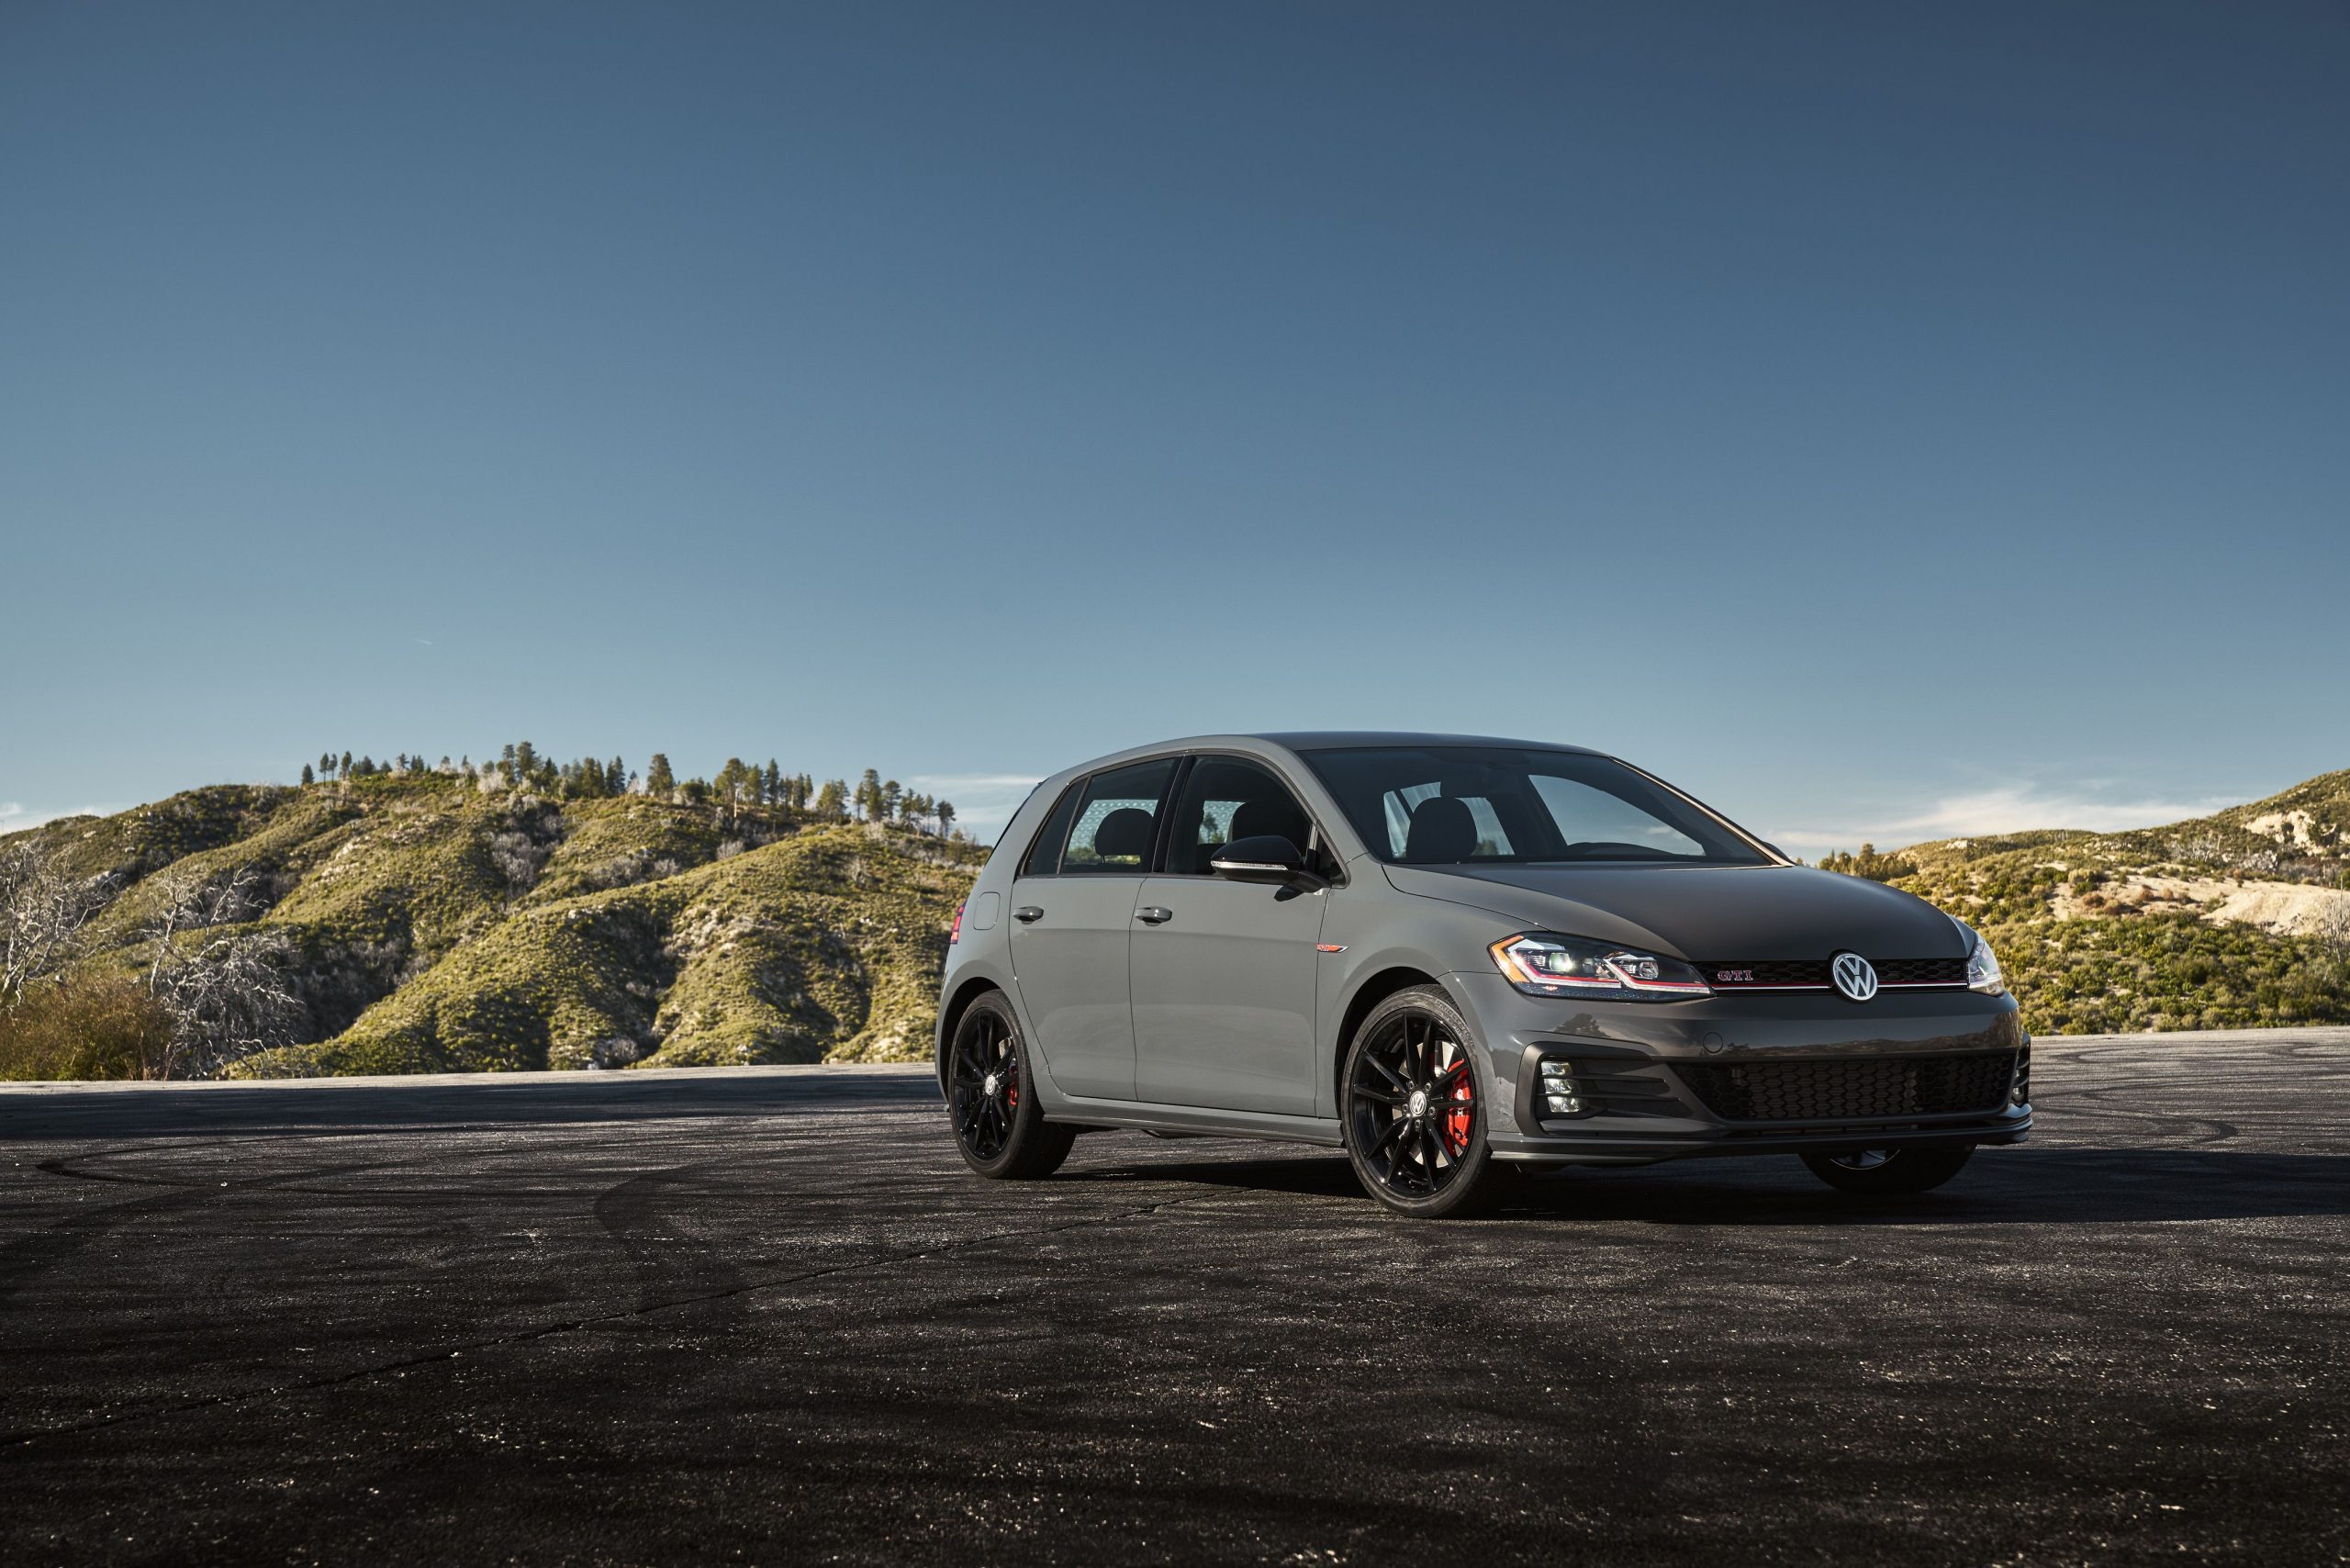 New 2022 Volkswagen Golf Gti Lease Deals, All Wheel Drive ...